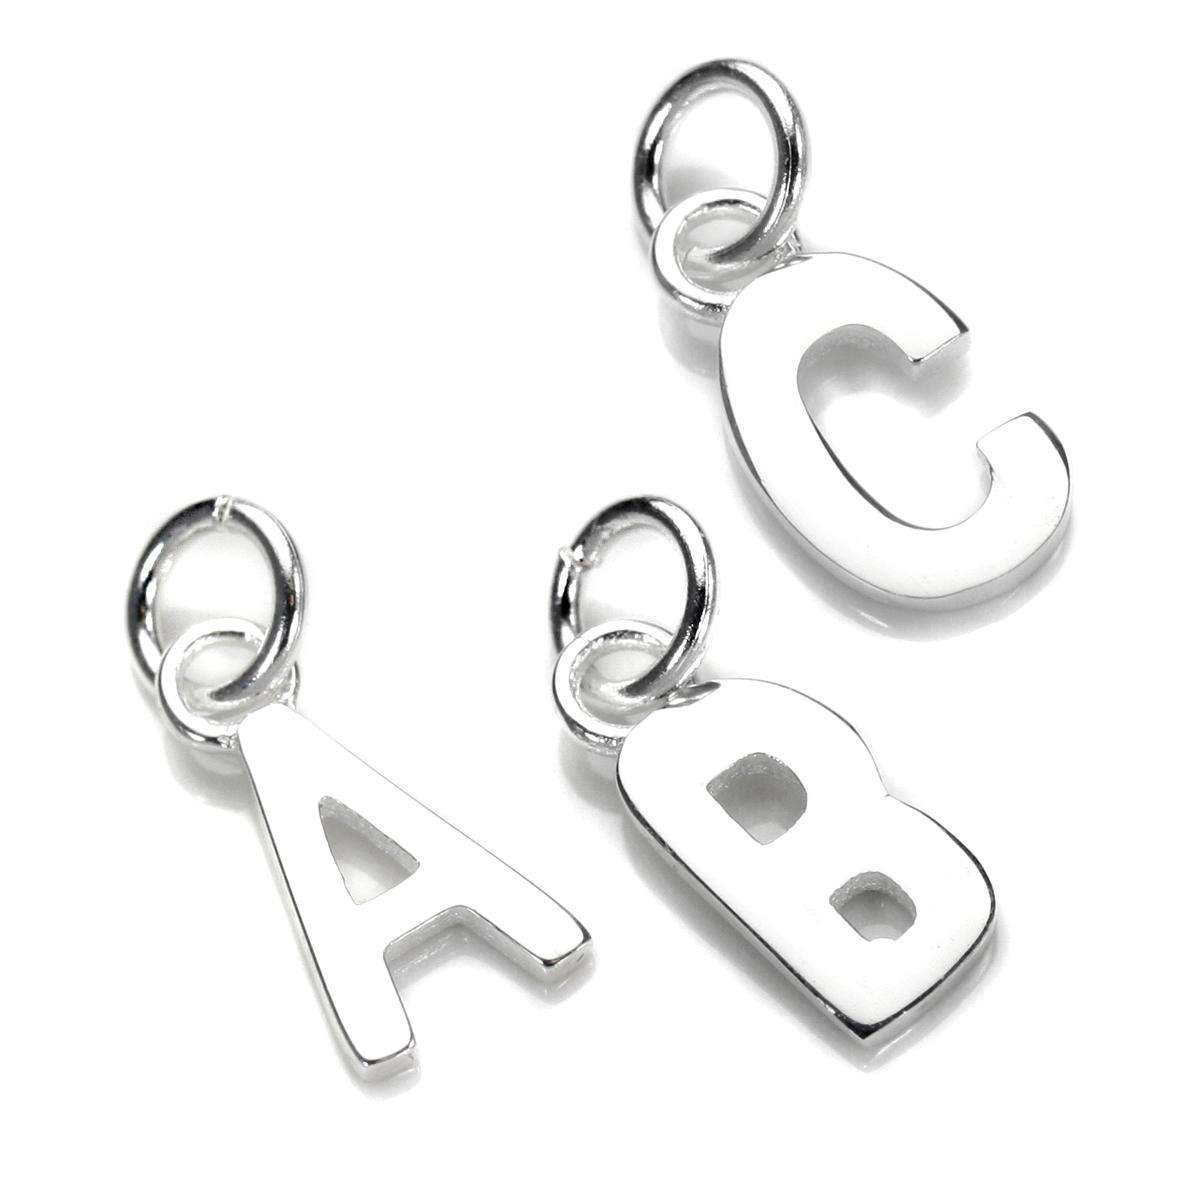 Buy Online Customize designed  alphabet Charm | letter charm |